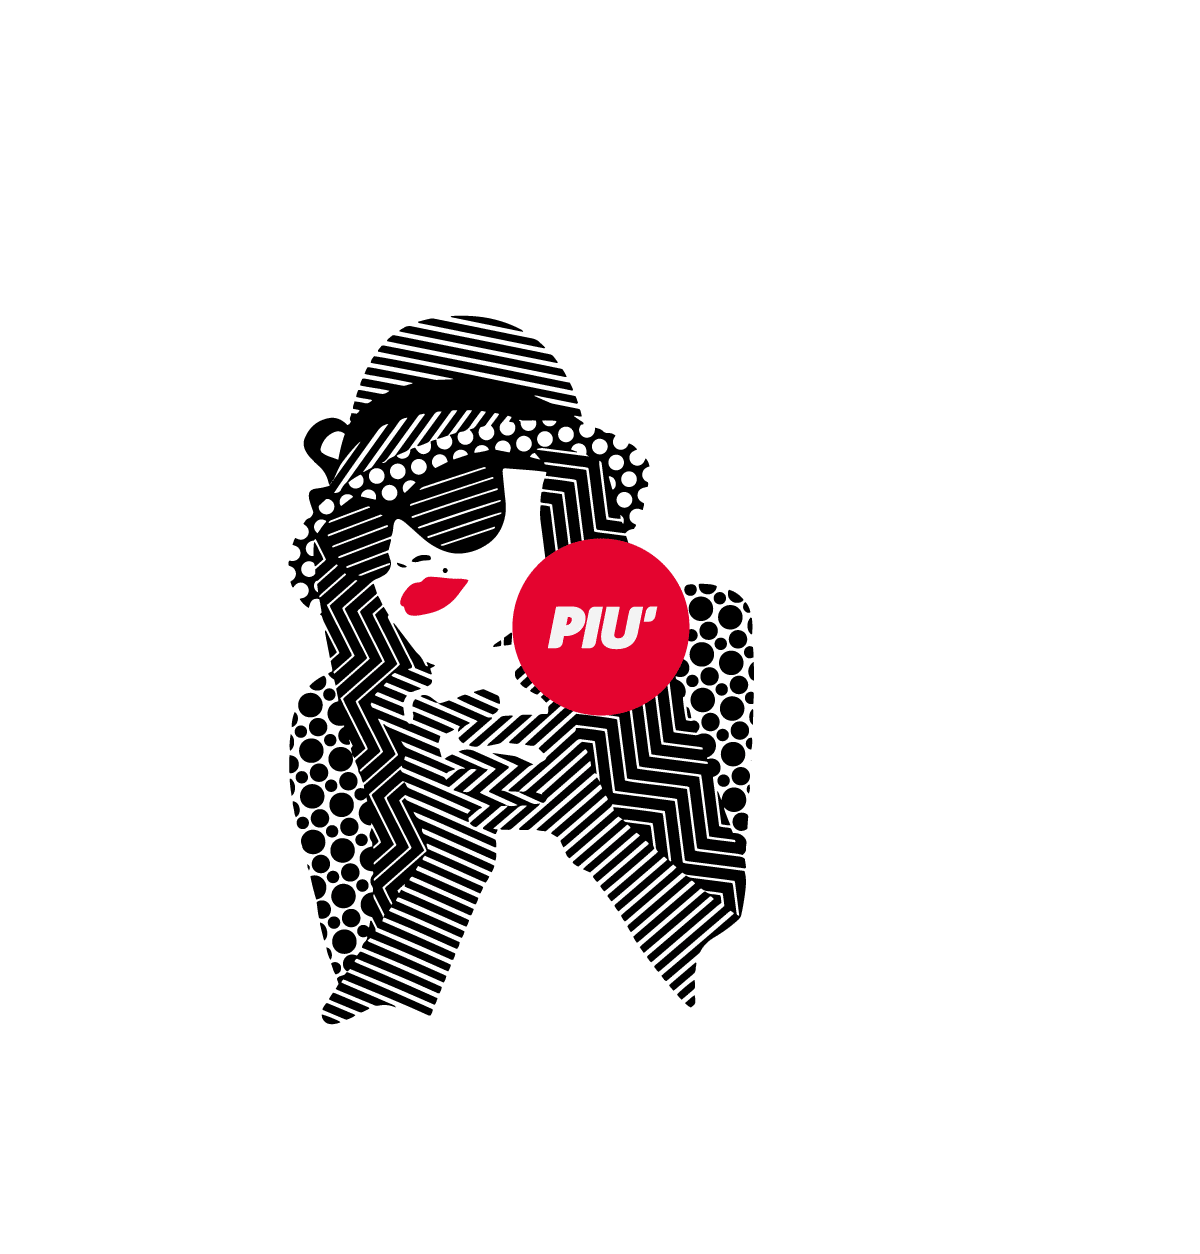 PIU Animation